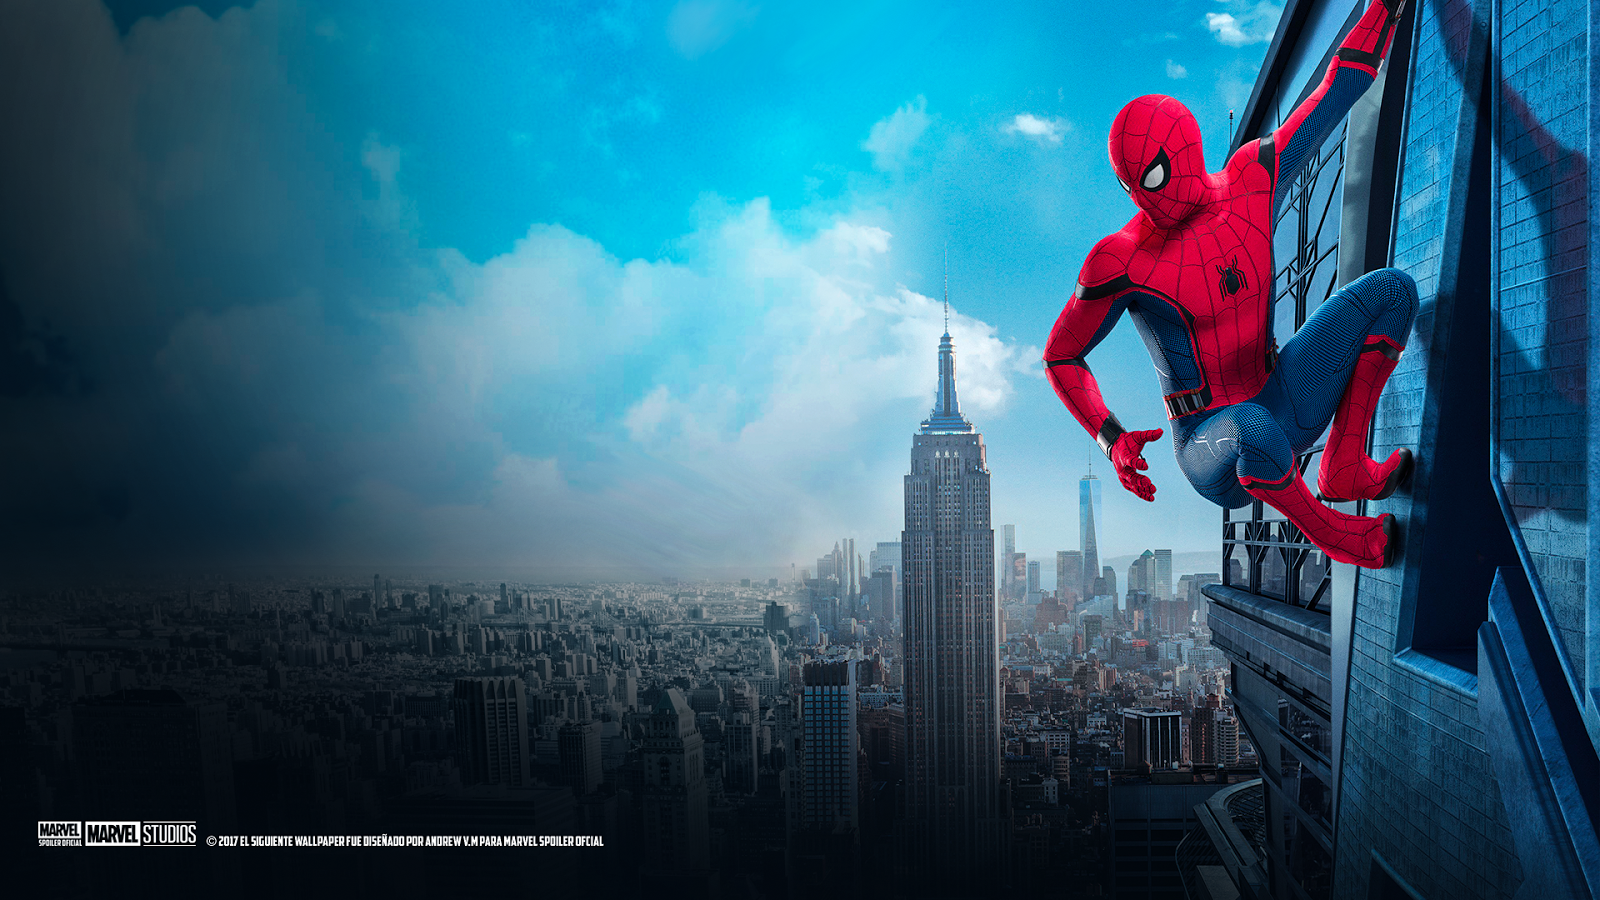 wallpaper para pc,superhero,fictional character,spider man,batman,sky